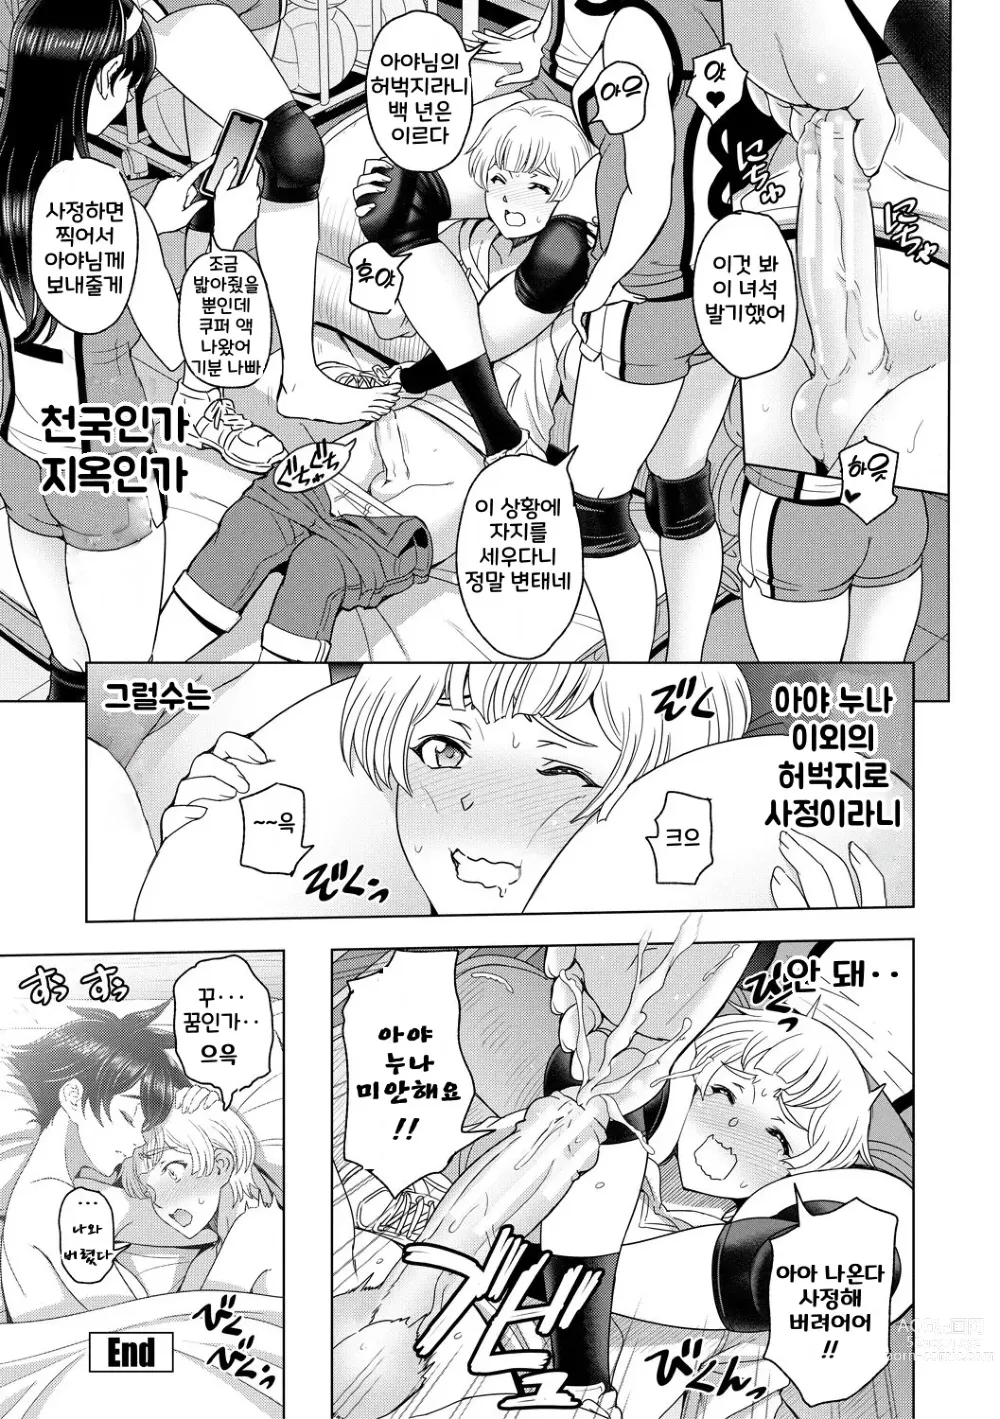 Page 213 of manga Nee Ecchi shichao kka - Hey, lets have sex.